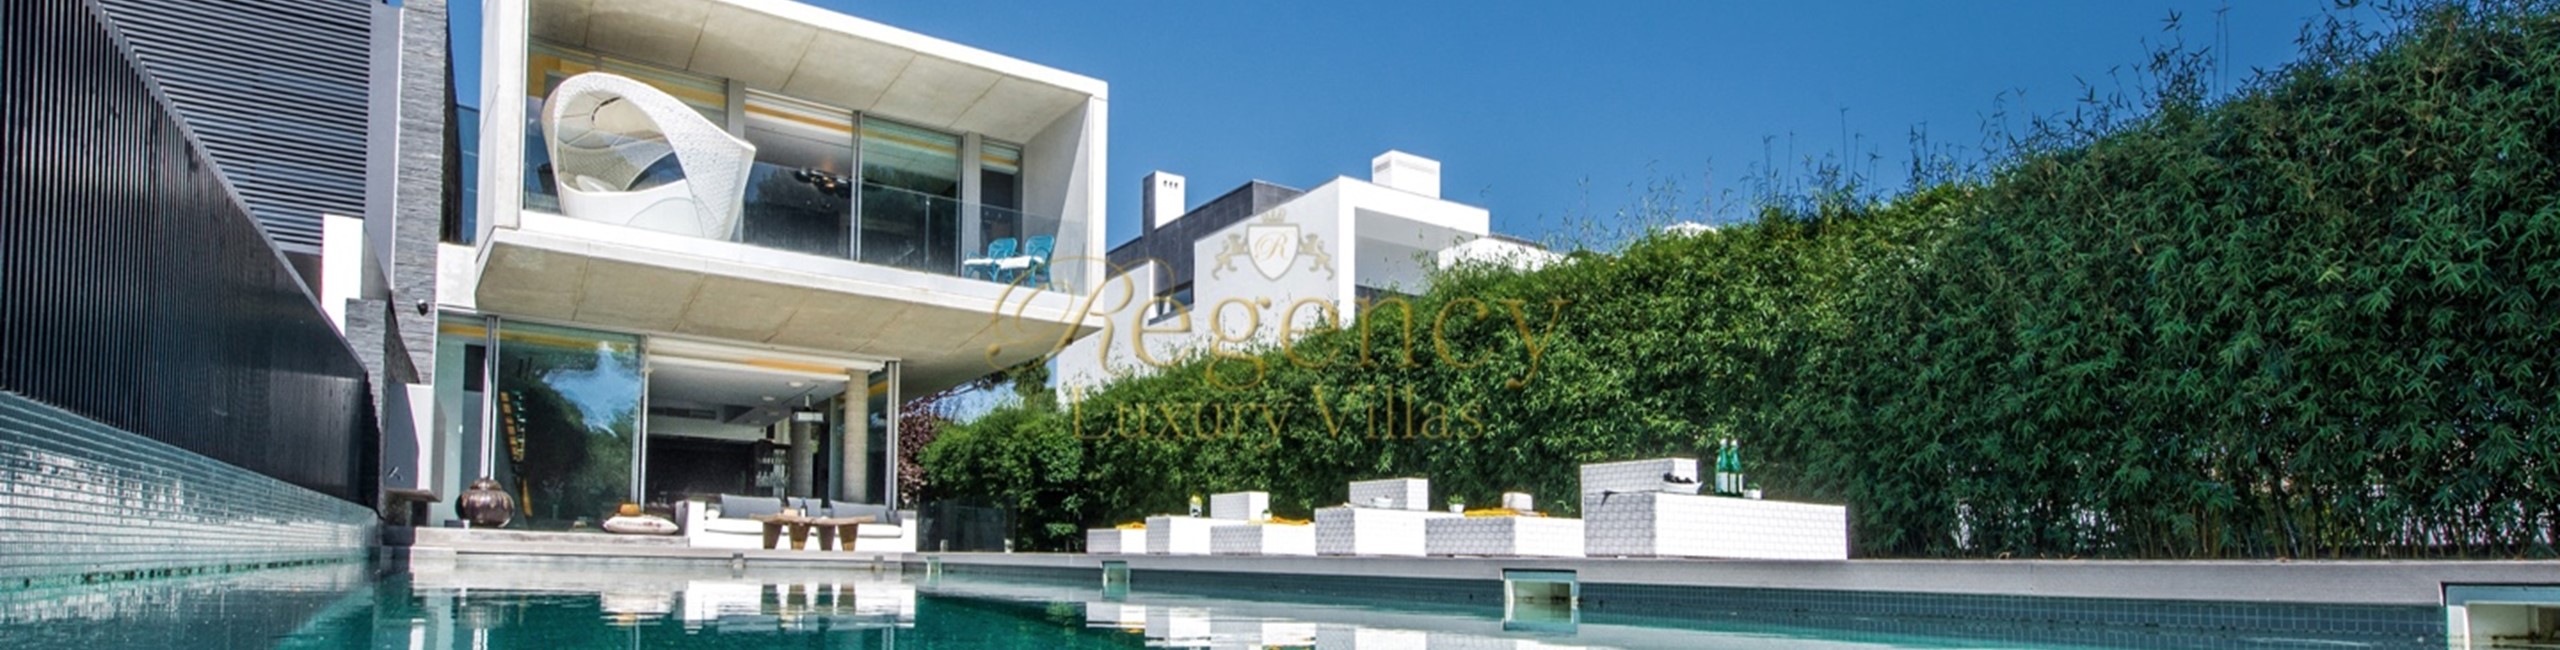 Vilamoura Villa To Rent With 4 Bedrooms Near The Marina Portugal